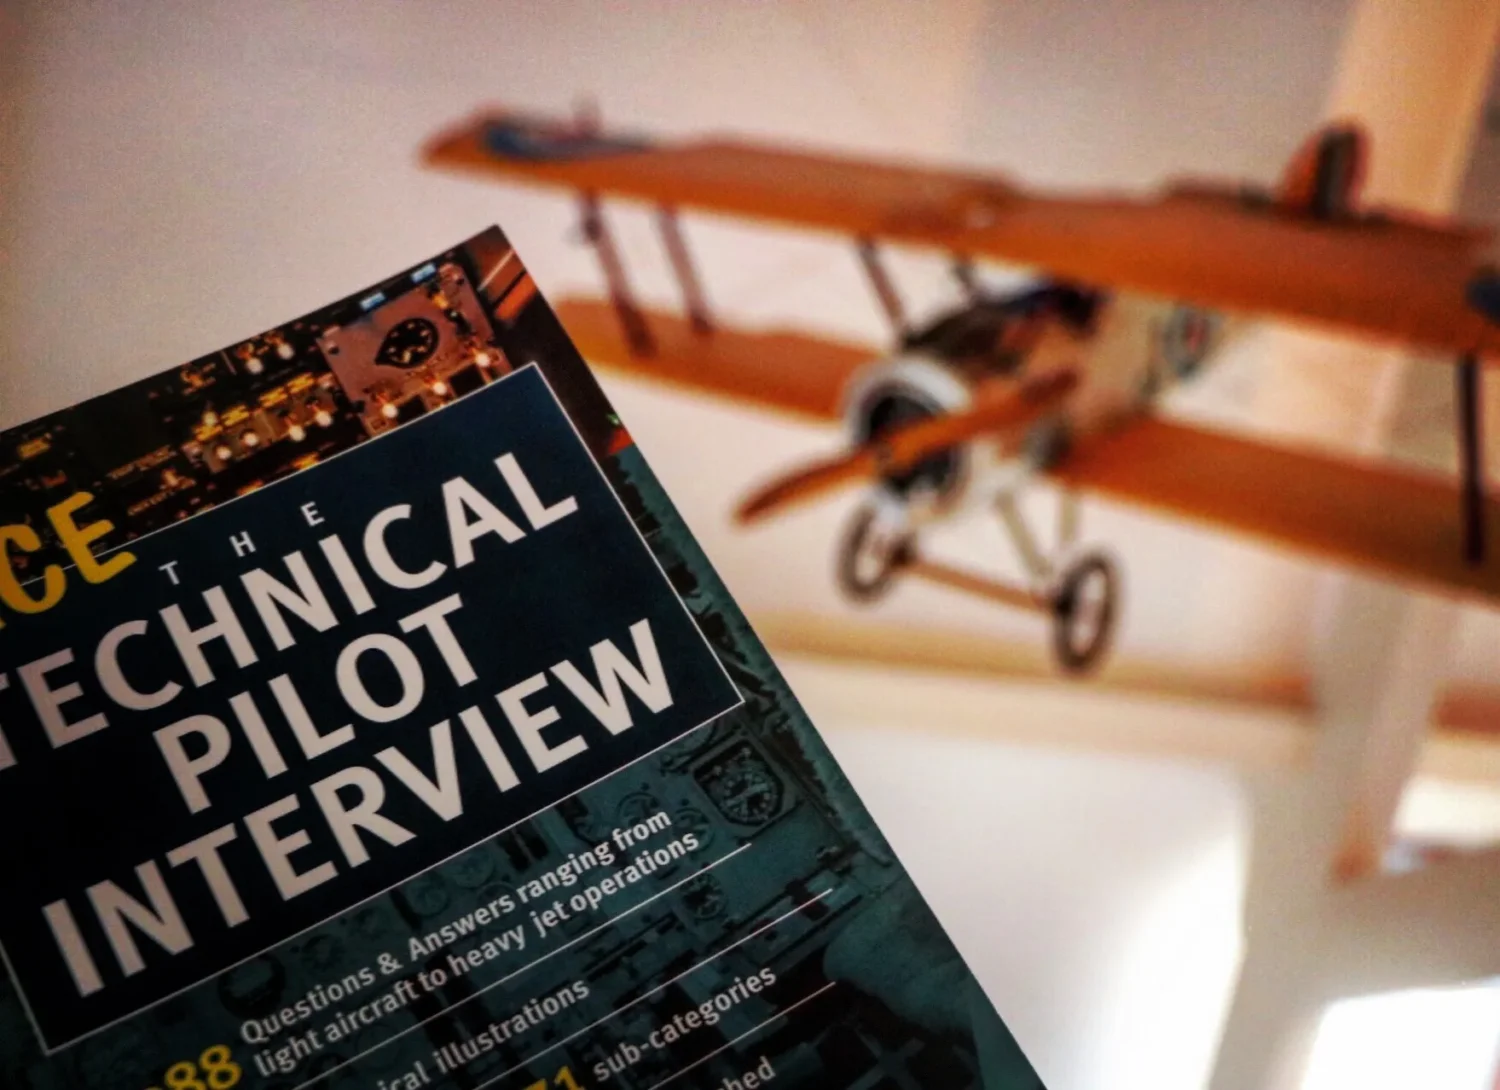 Book for aviators